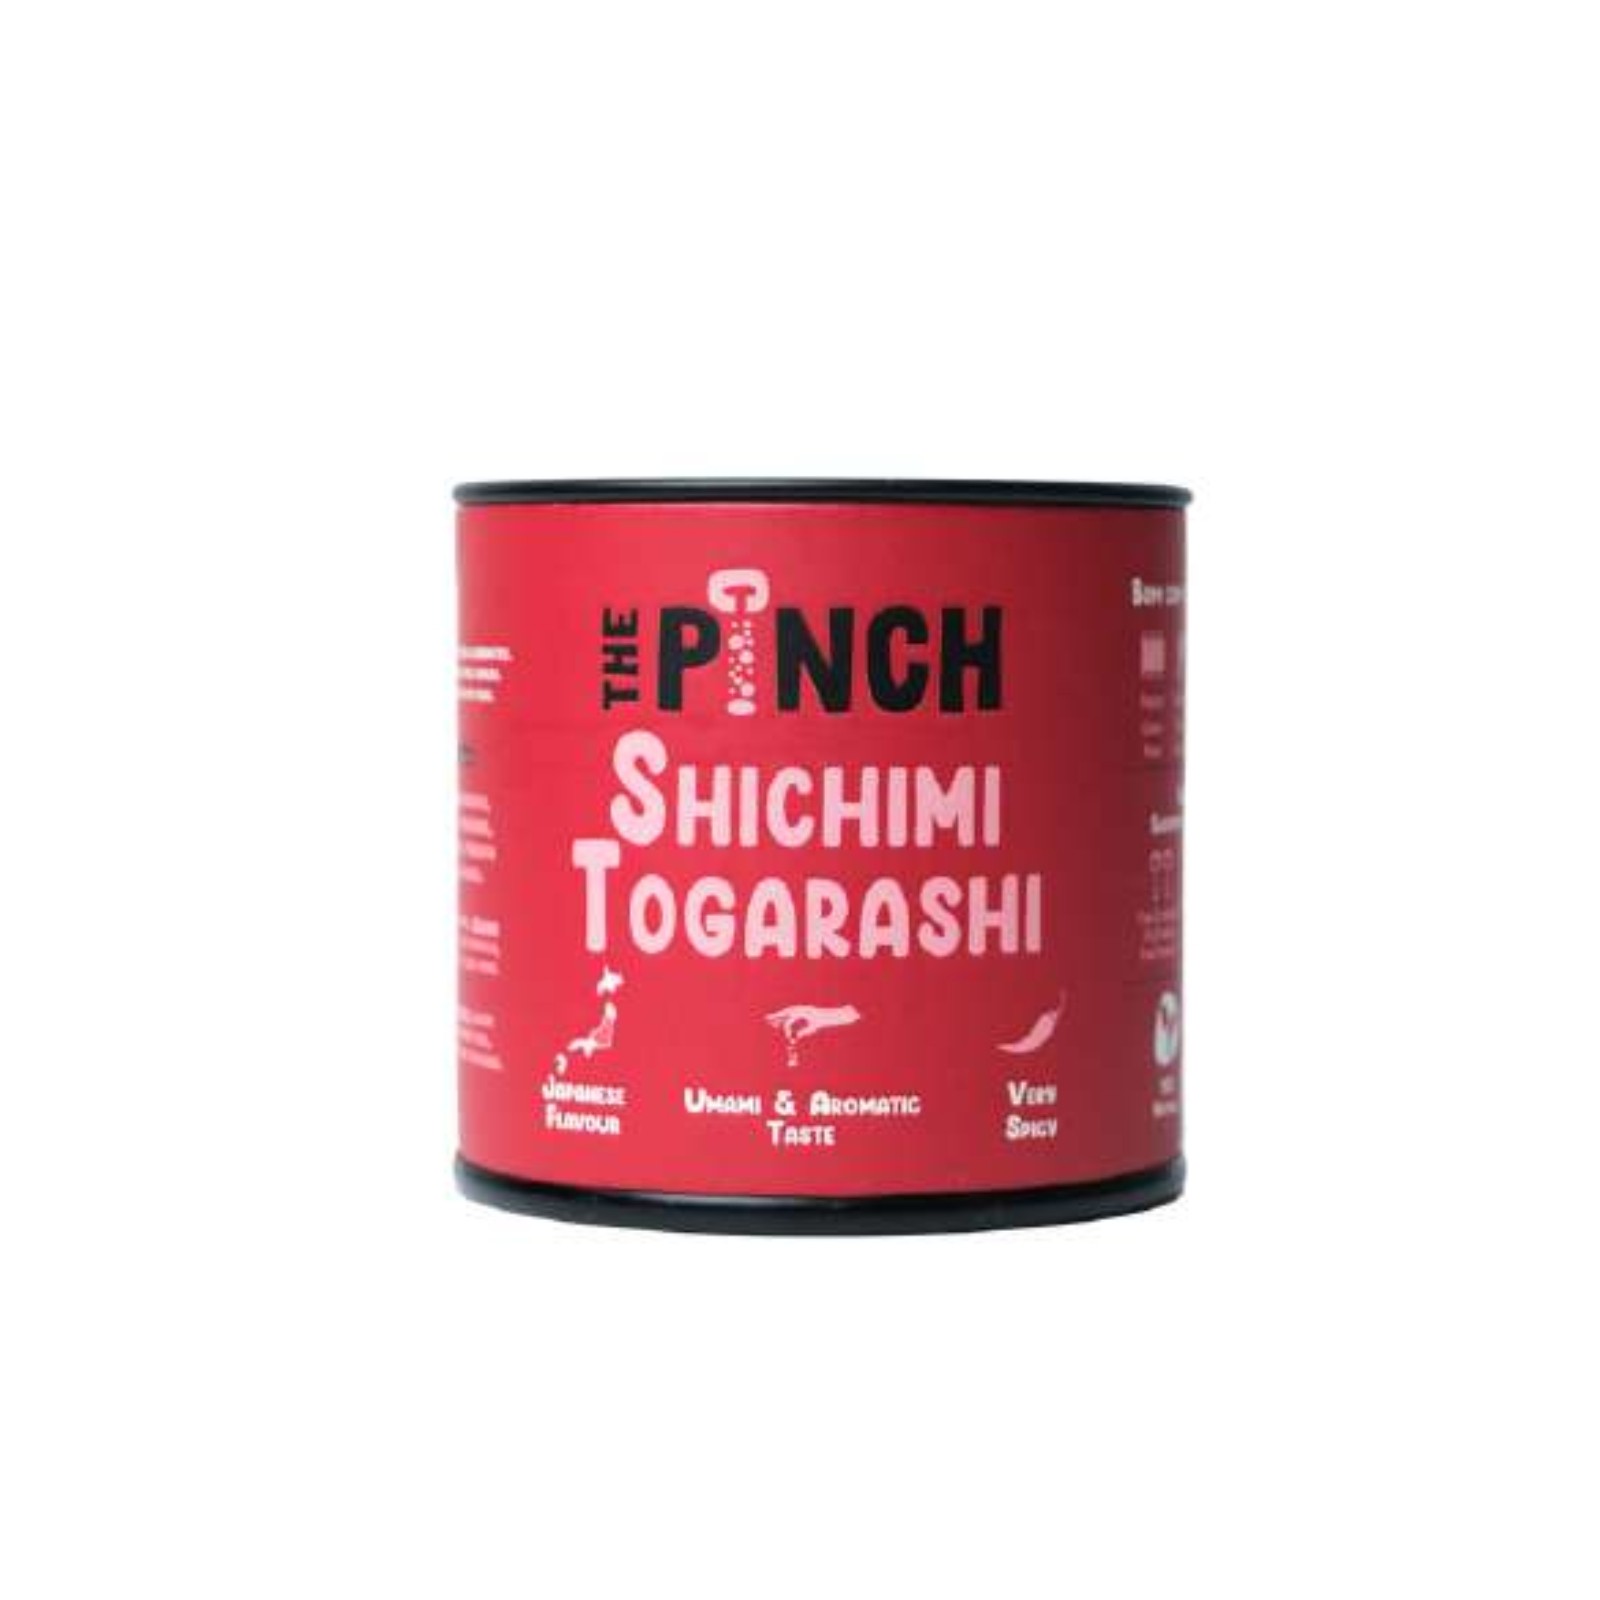 The Pinch Assaisonnement Shichimi Togarashi